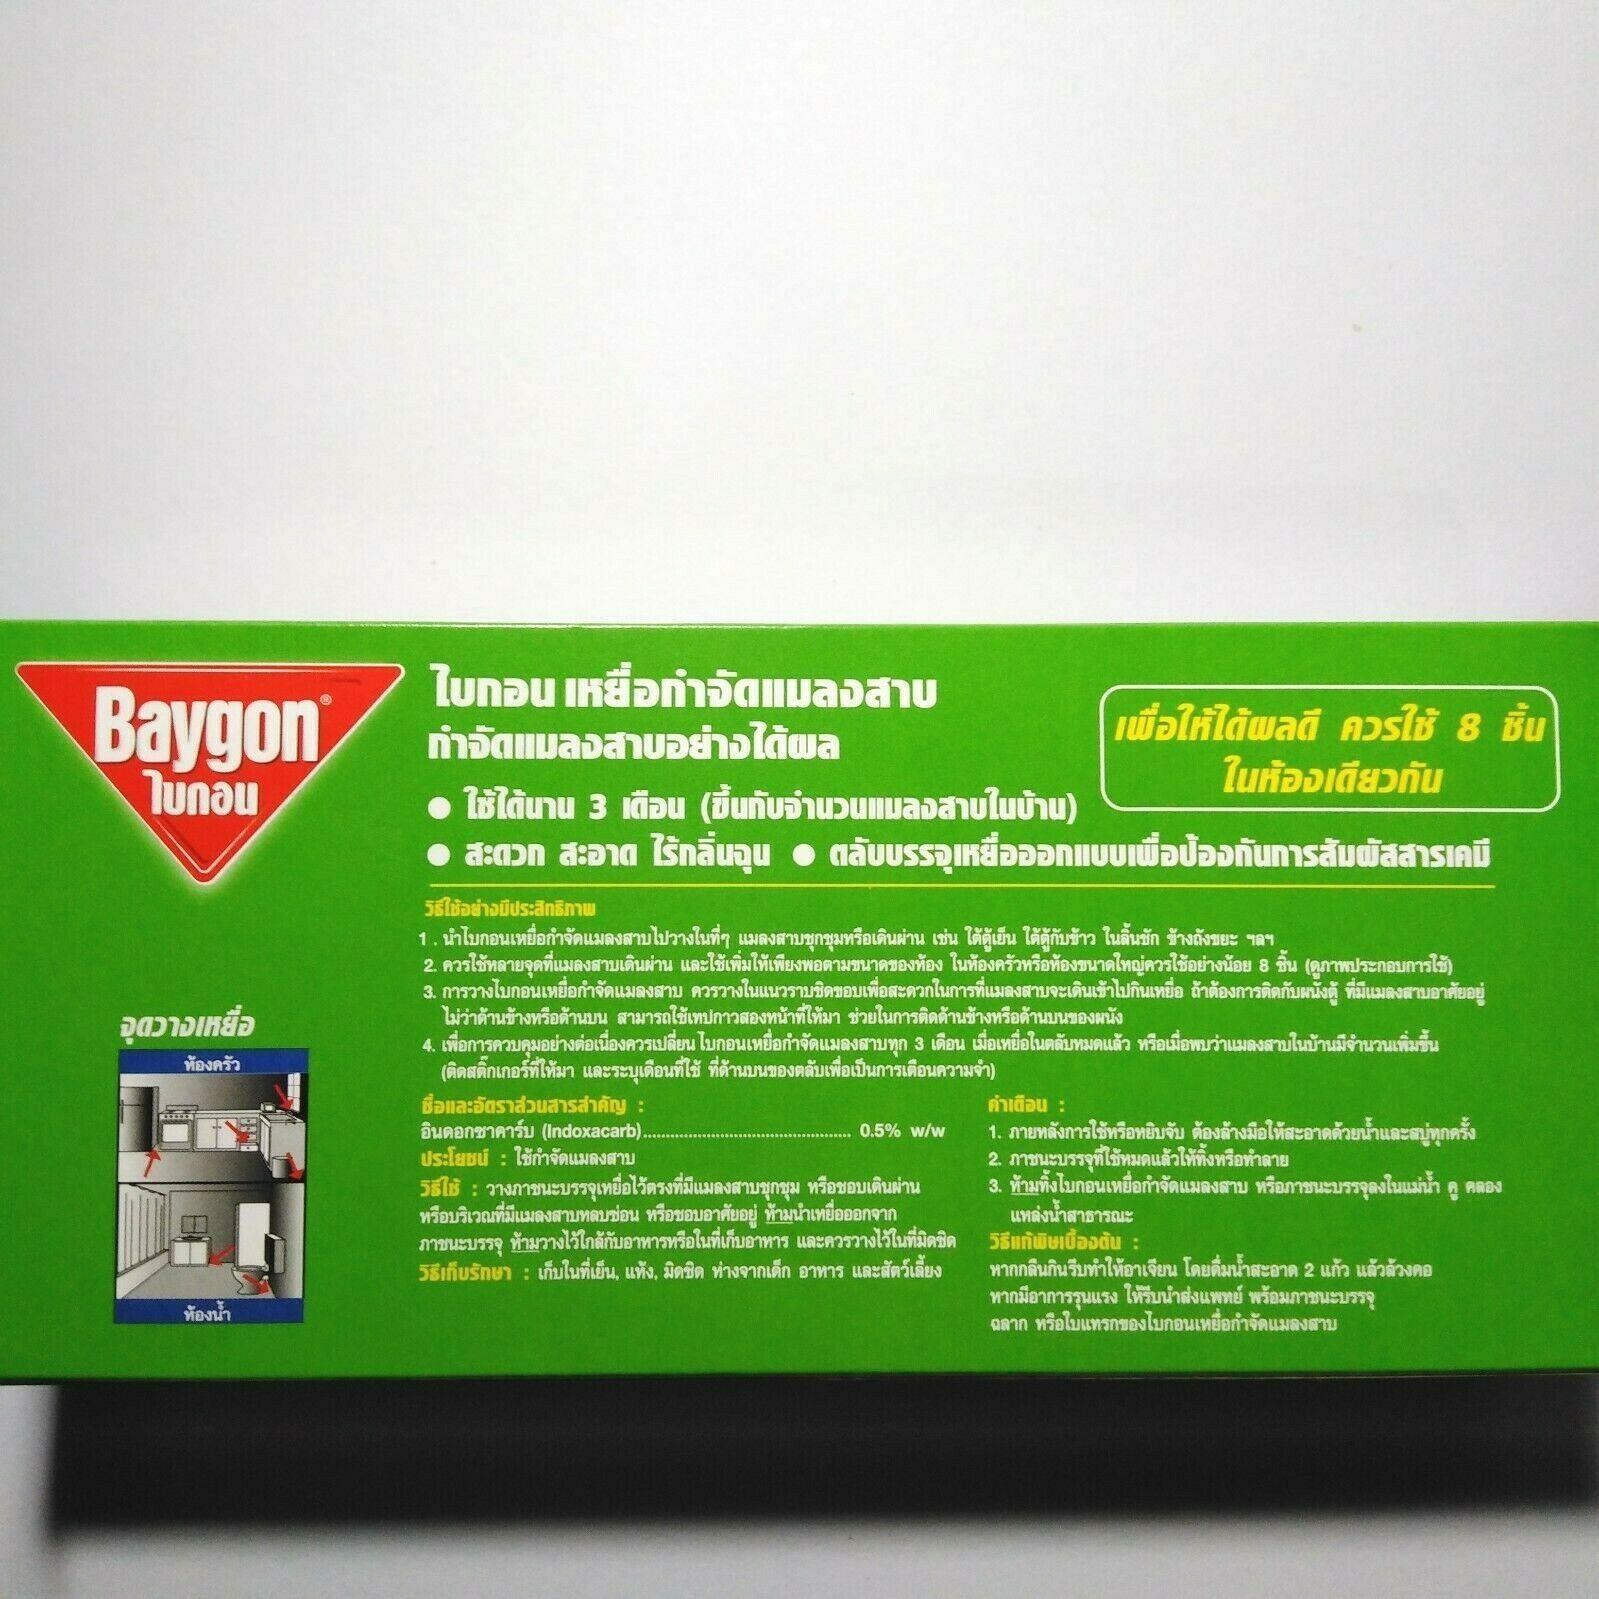 Baygon Logo - 6 Pieces Rain BAYGON Roach Baits Station